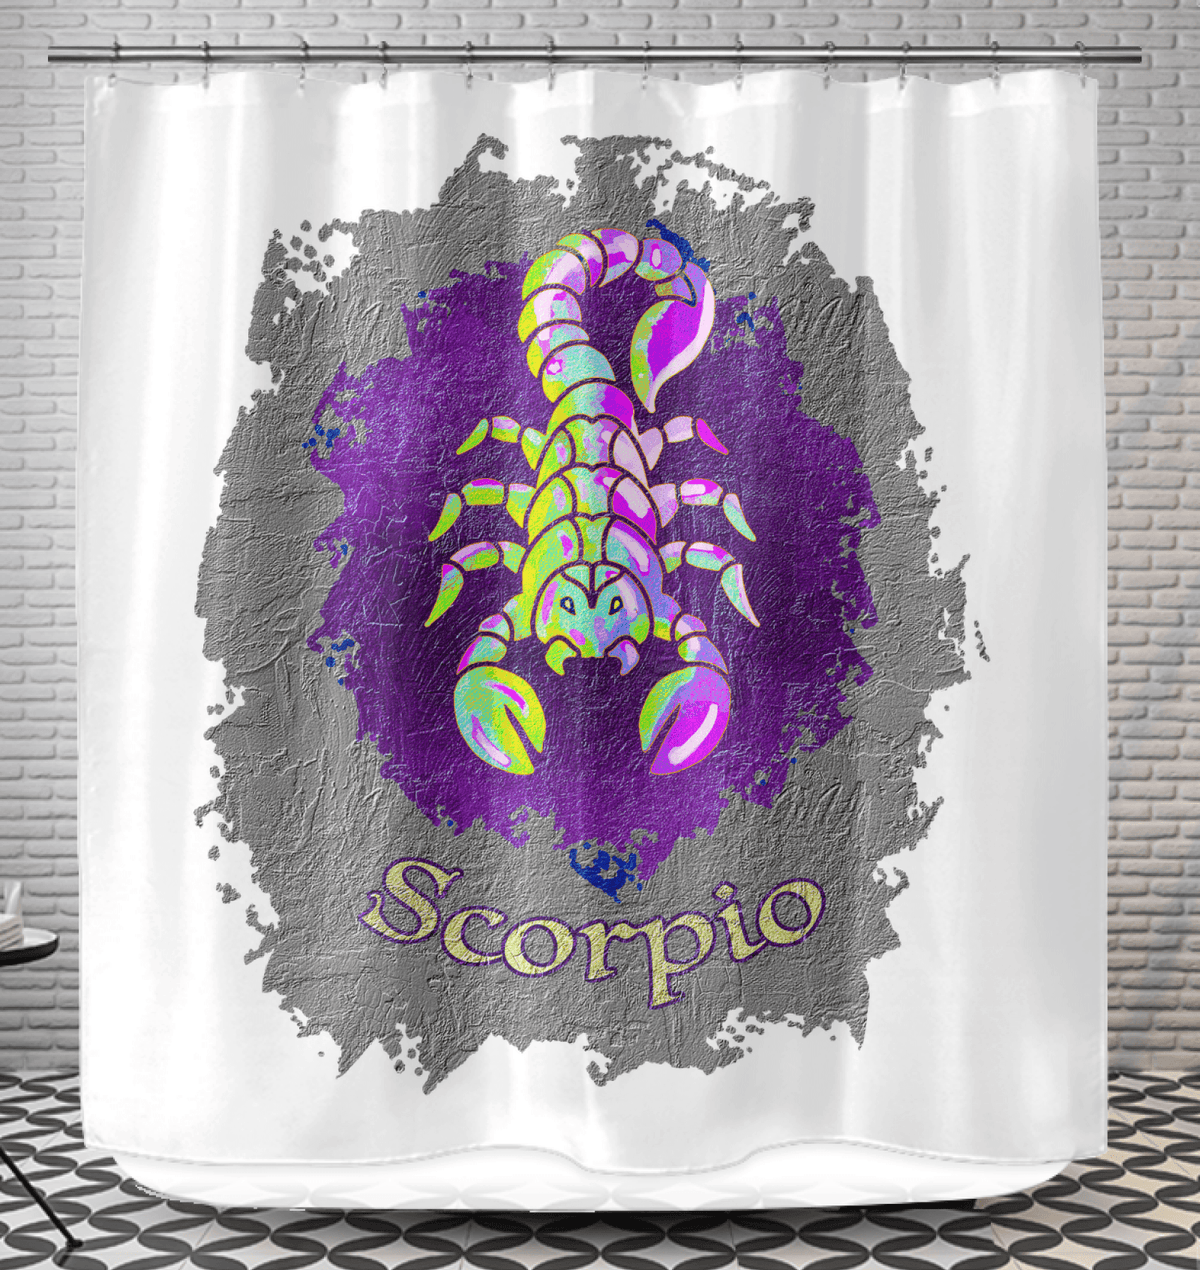 Scorpio Shower Curtain | Zodiac Series 11 - Beyond T-shirts